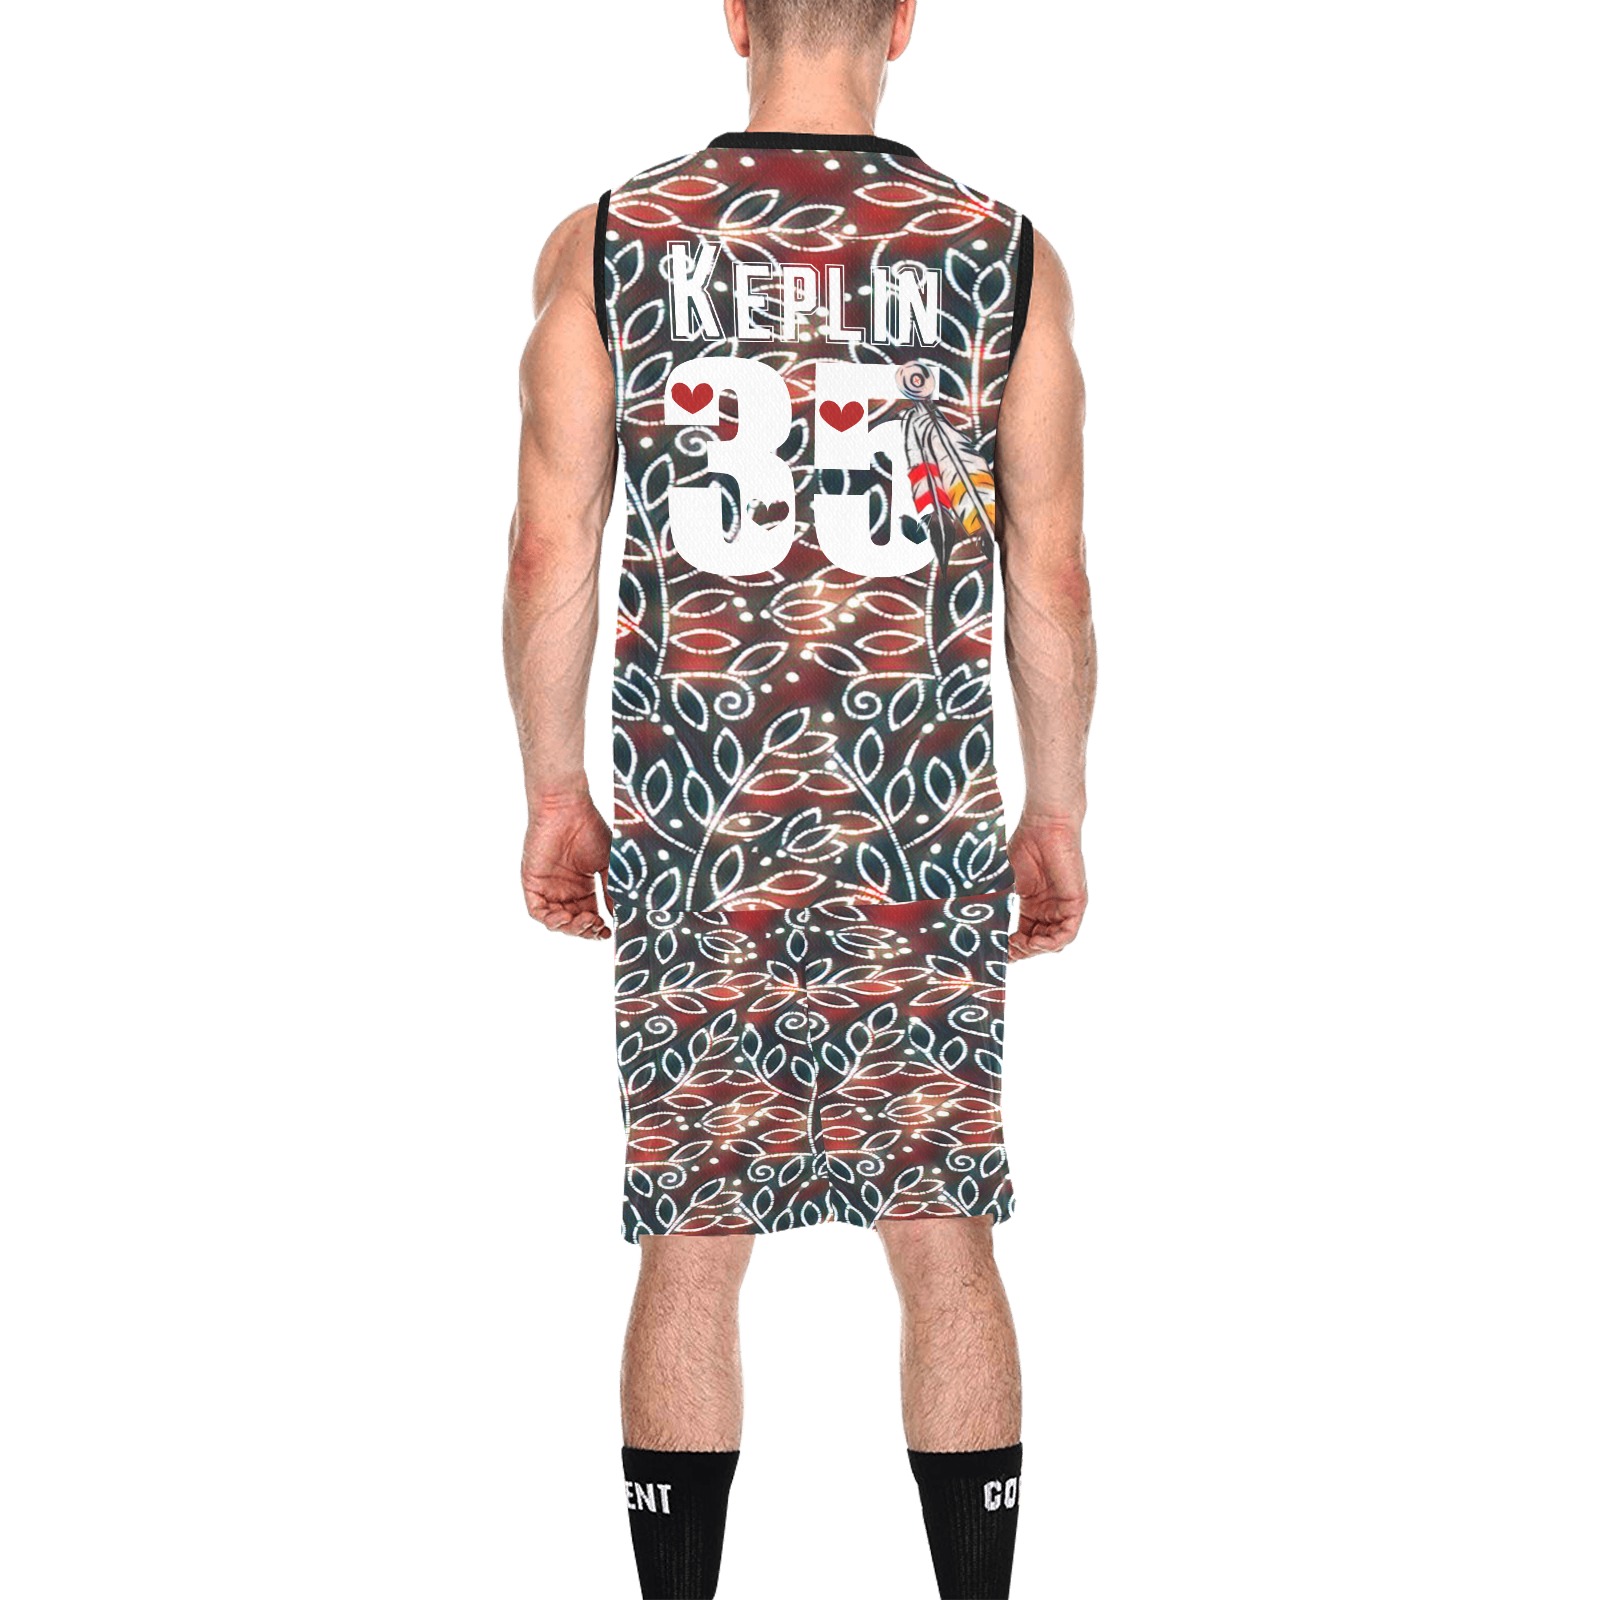 Keplin 35 All Over Print Basketball Uniform